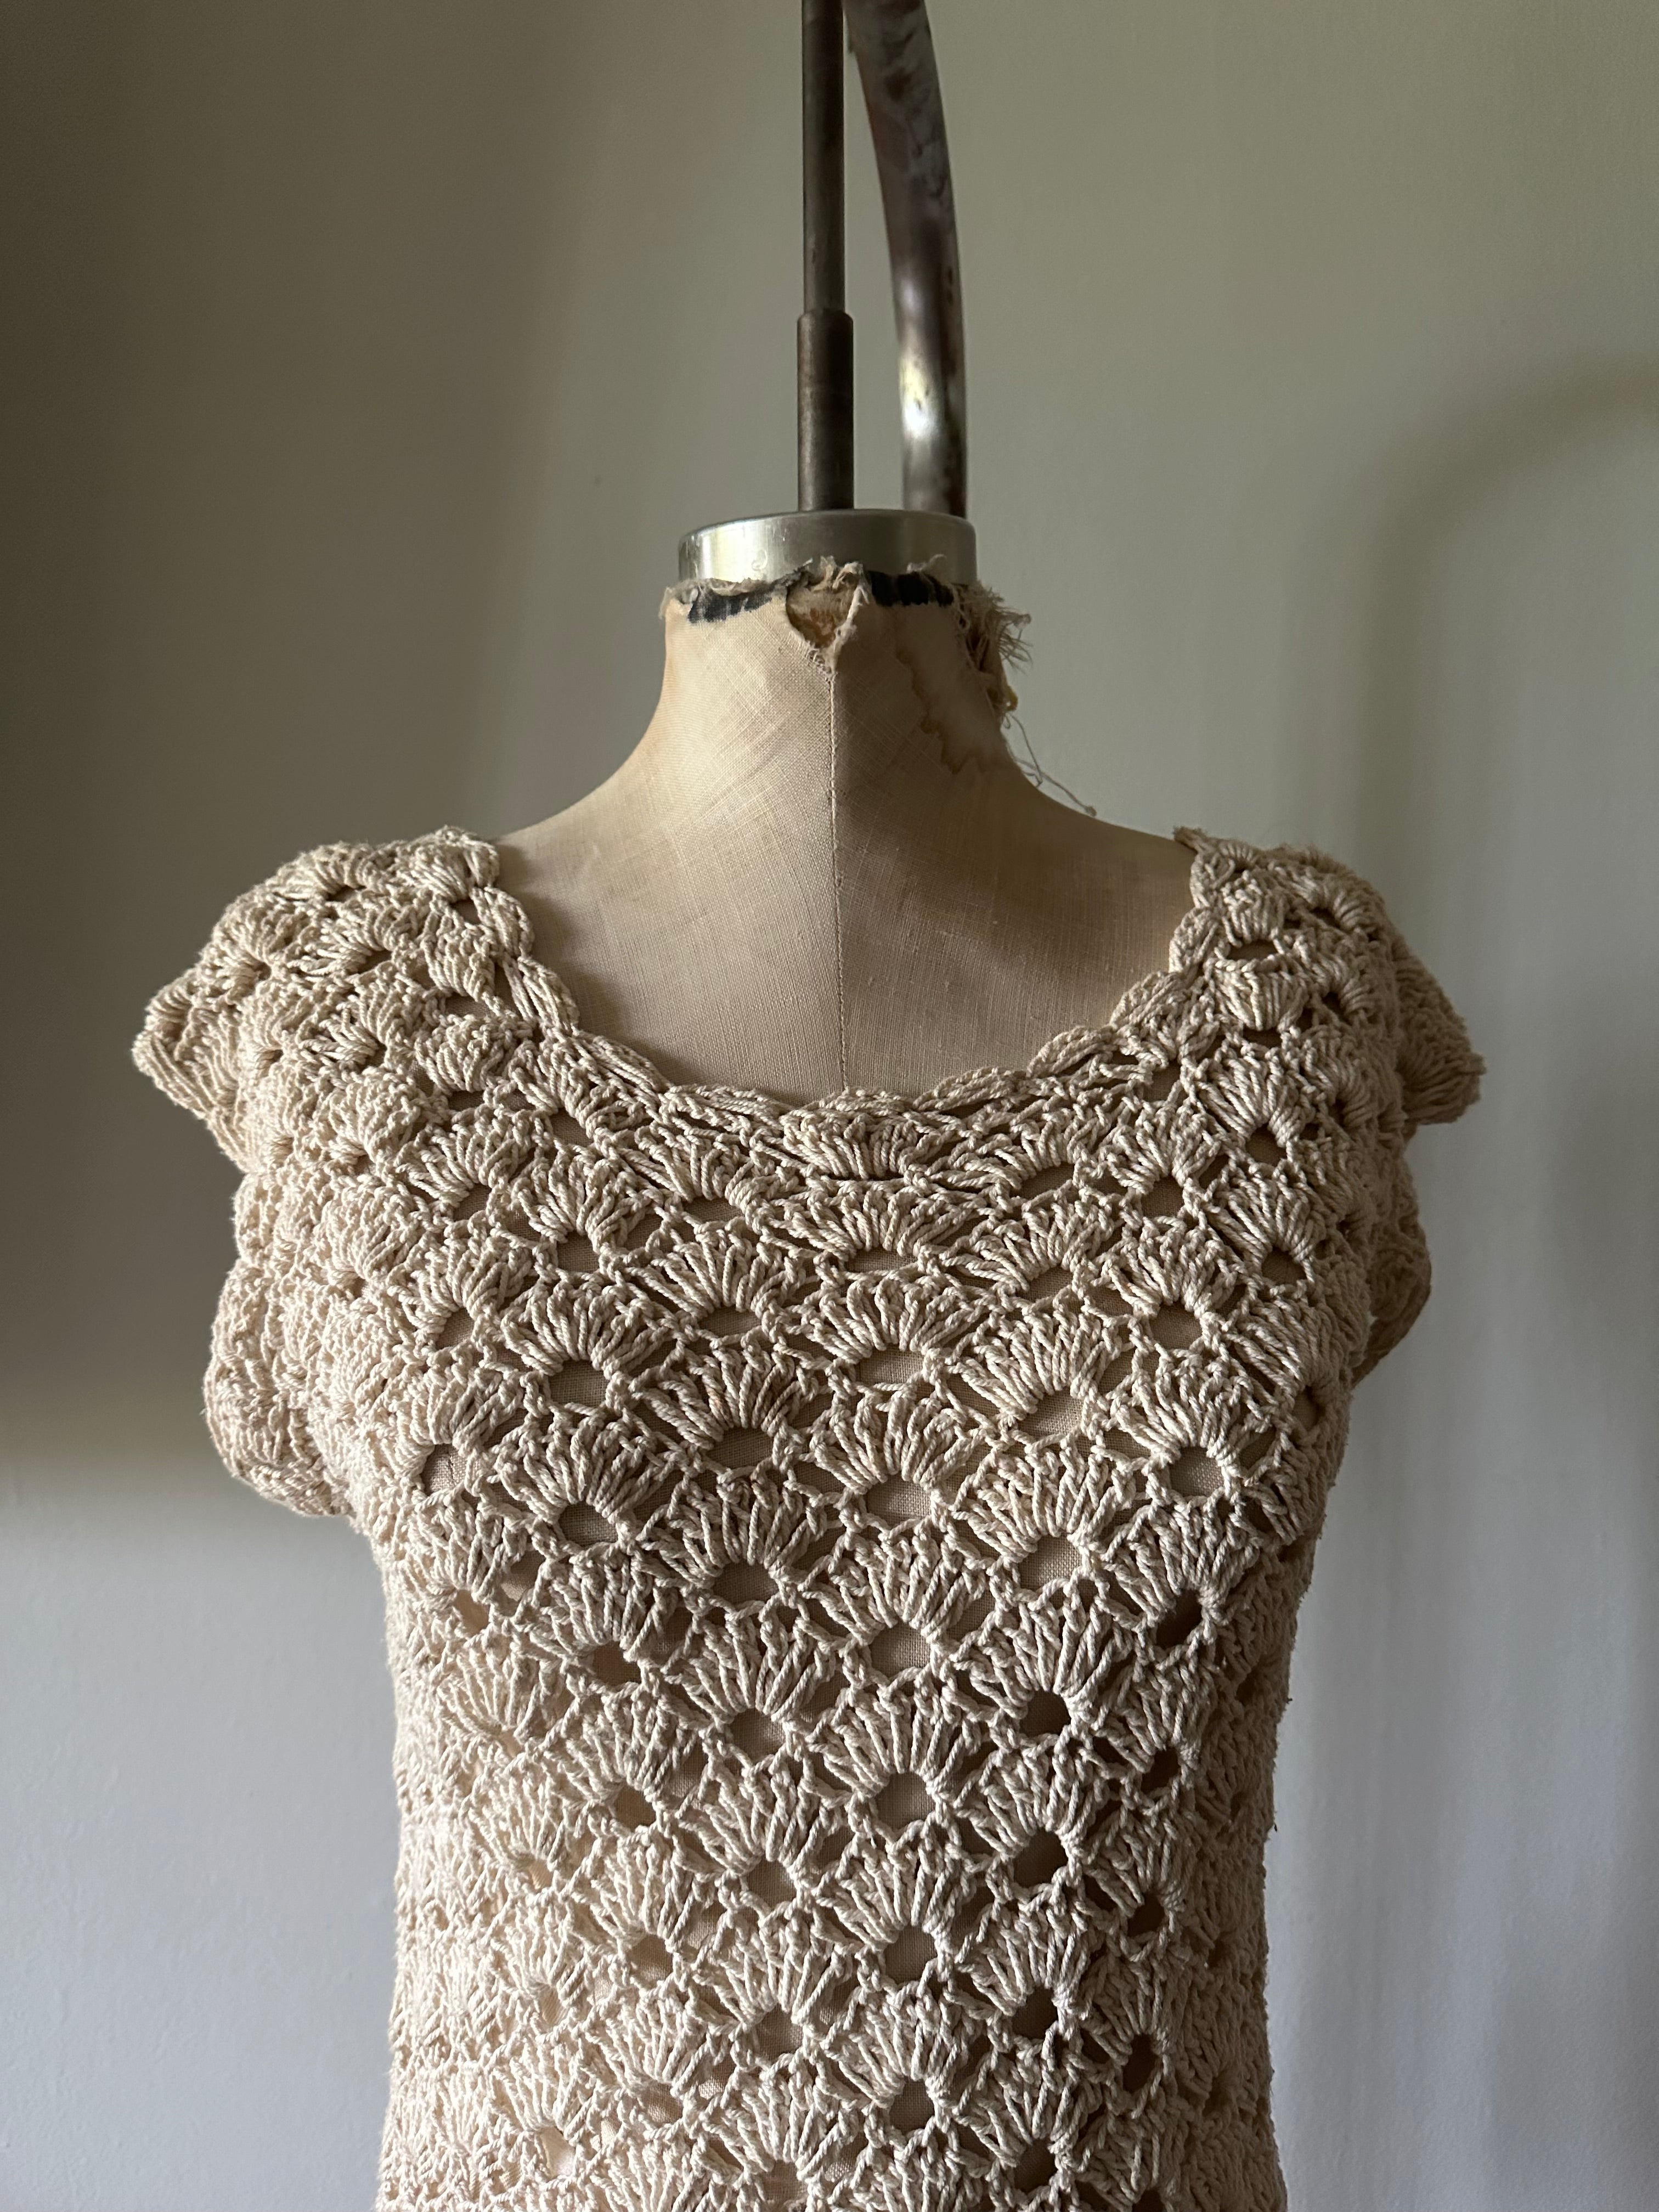 70s Boho Crochet Lace Ivory Handmade dress from Rico International